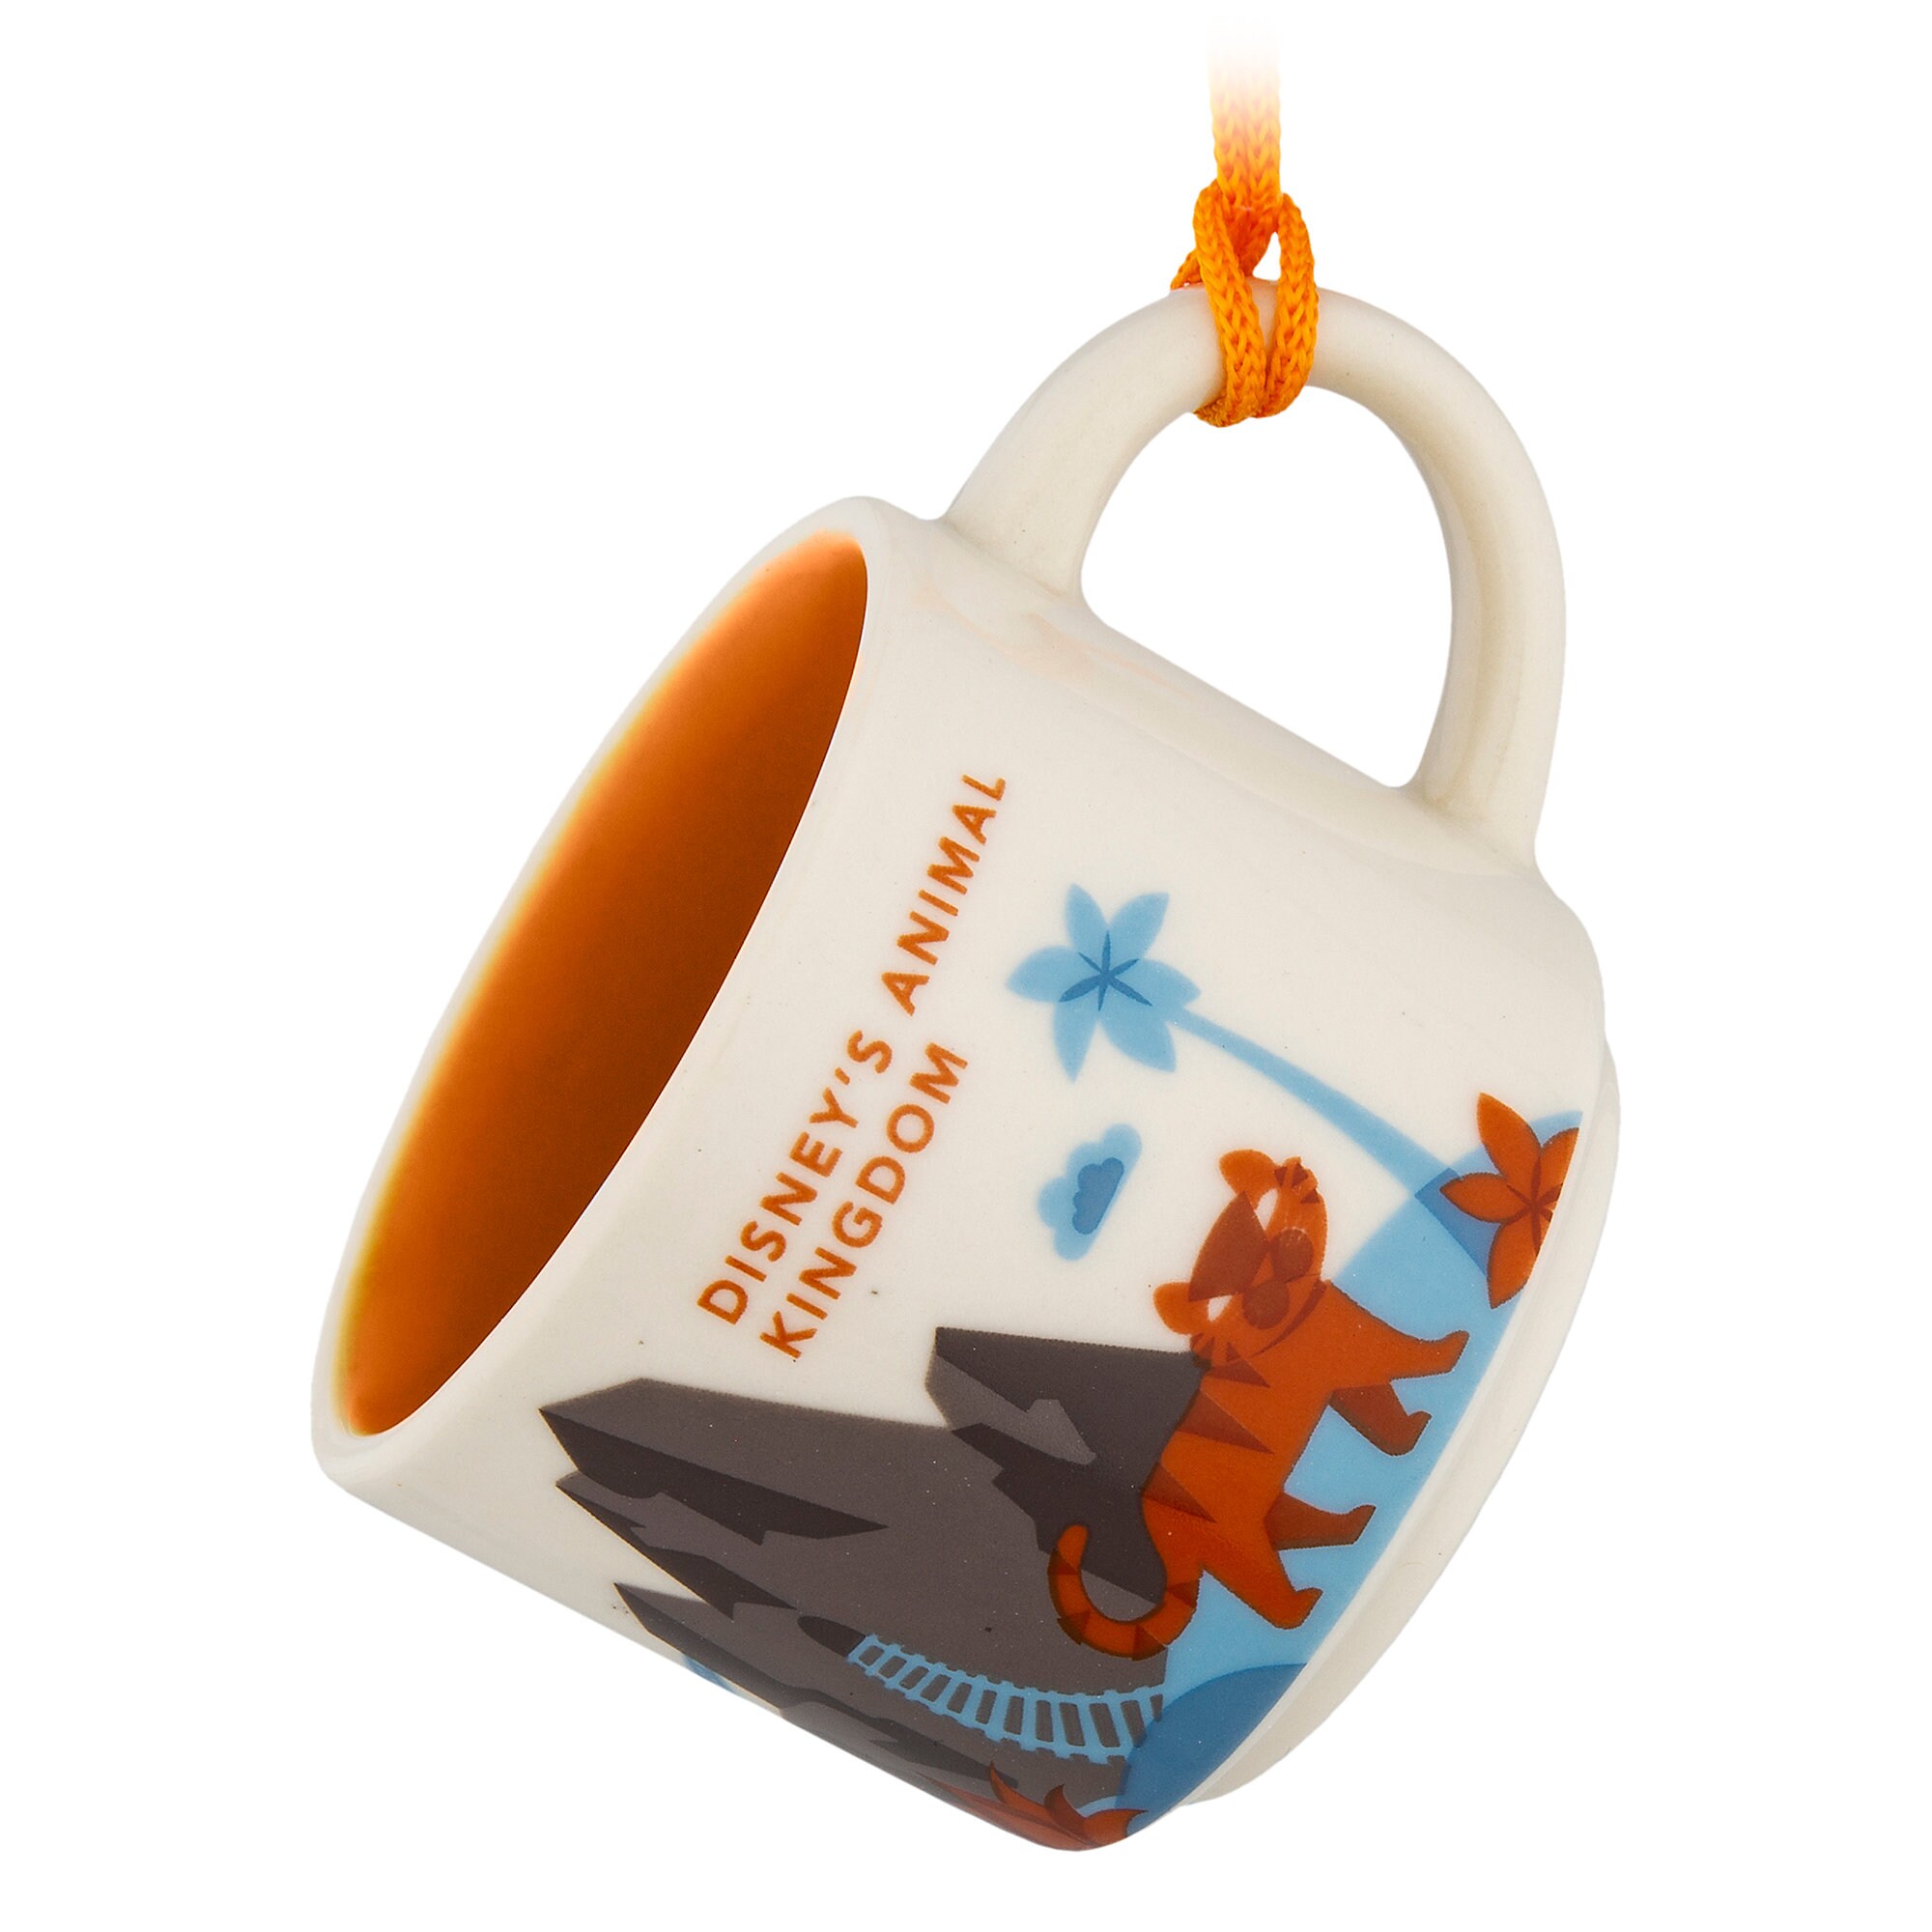 Disney's Animal Kingdom Starbucks YOU ARE HERE Mug Ornament